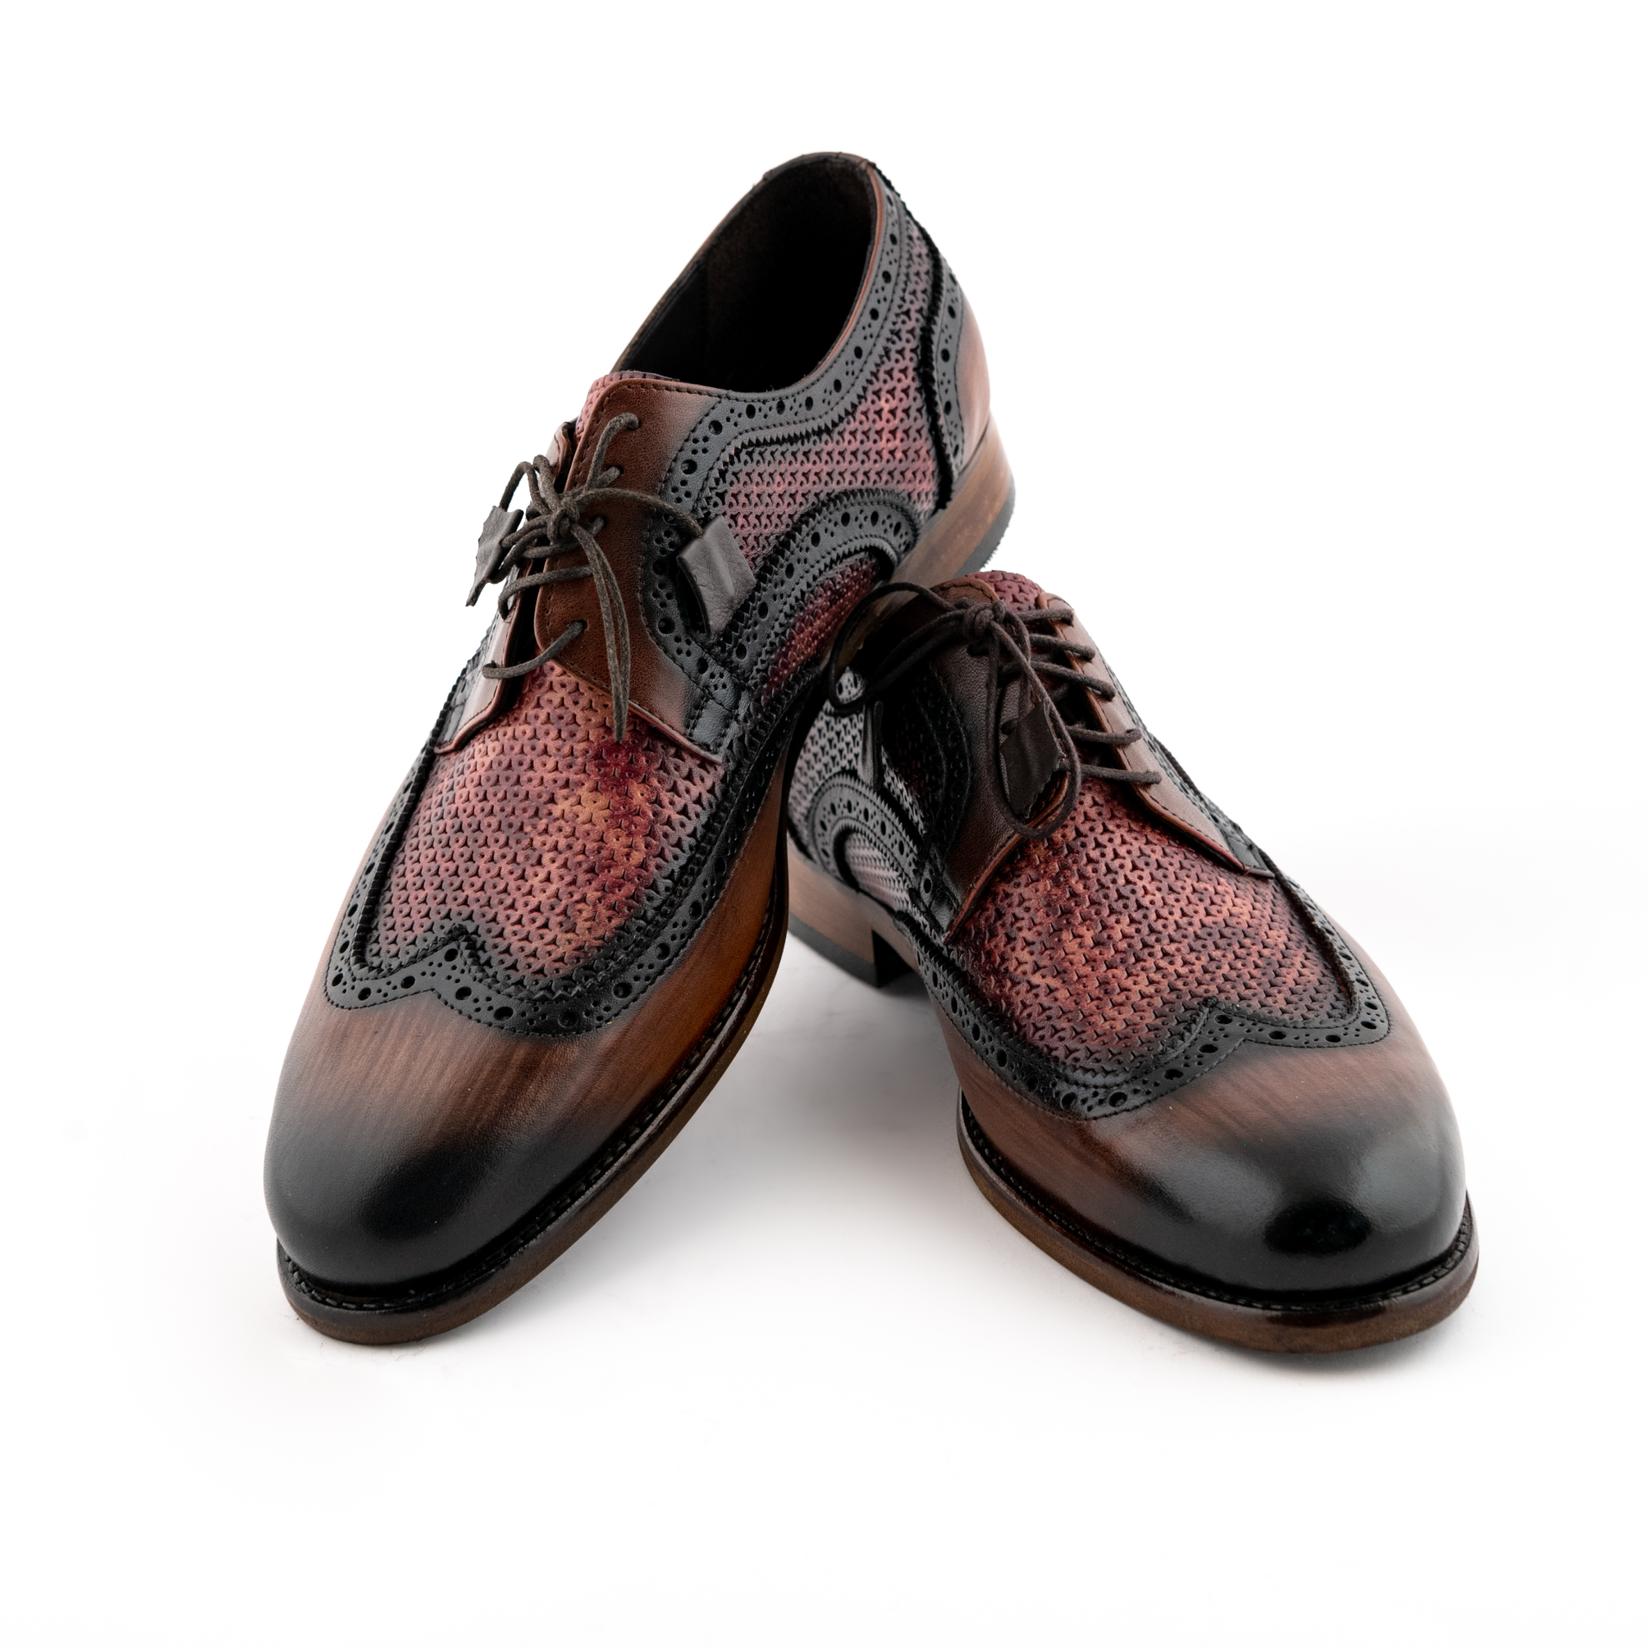 Selected image for SANTOS & SANTORINI Muške cipele Frederico braon